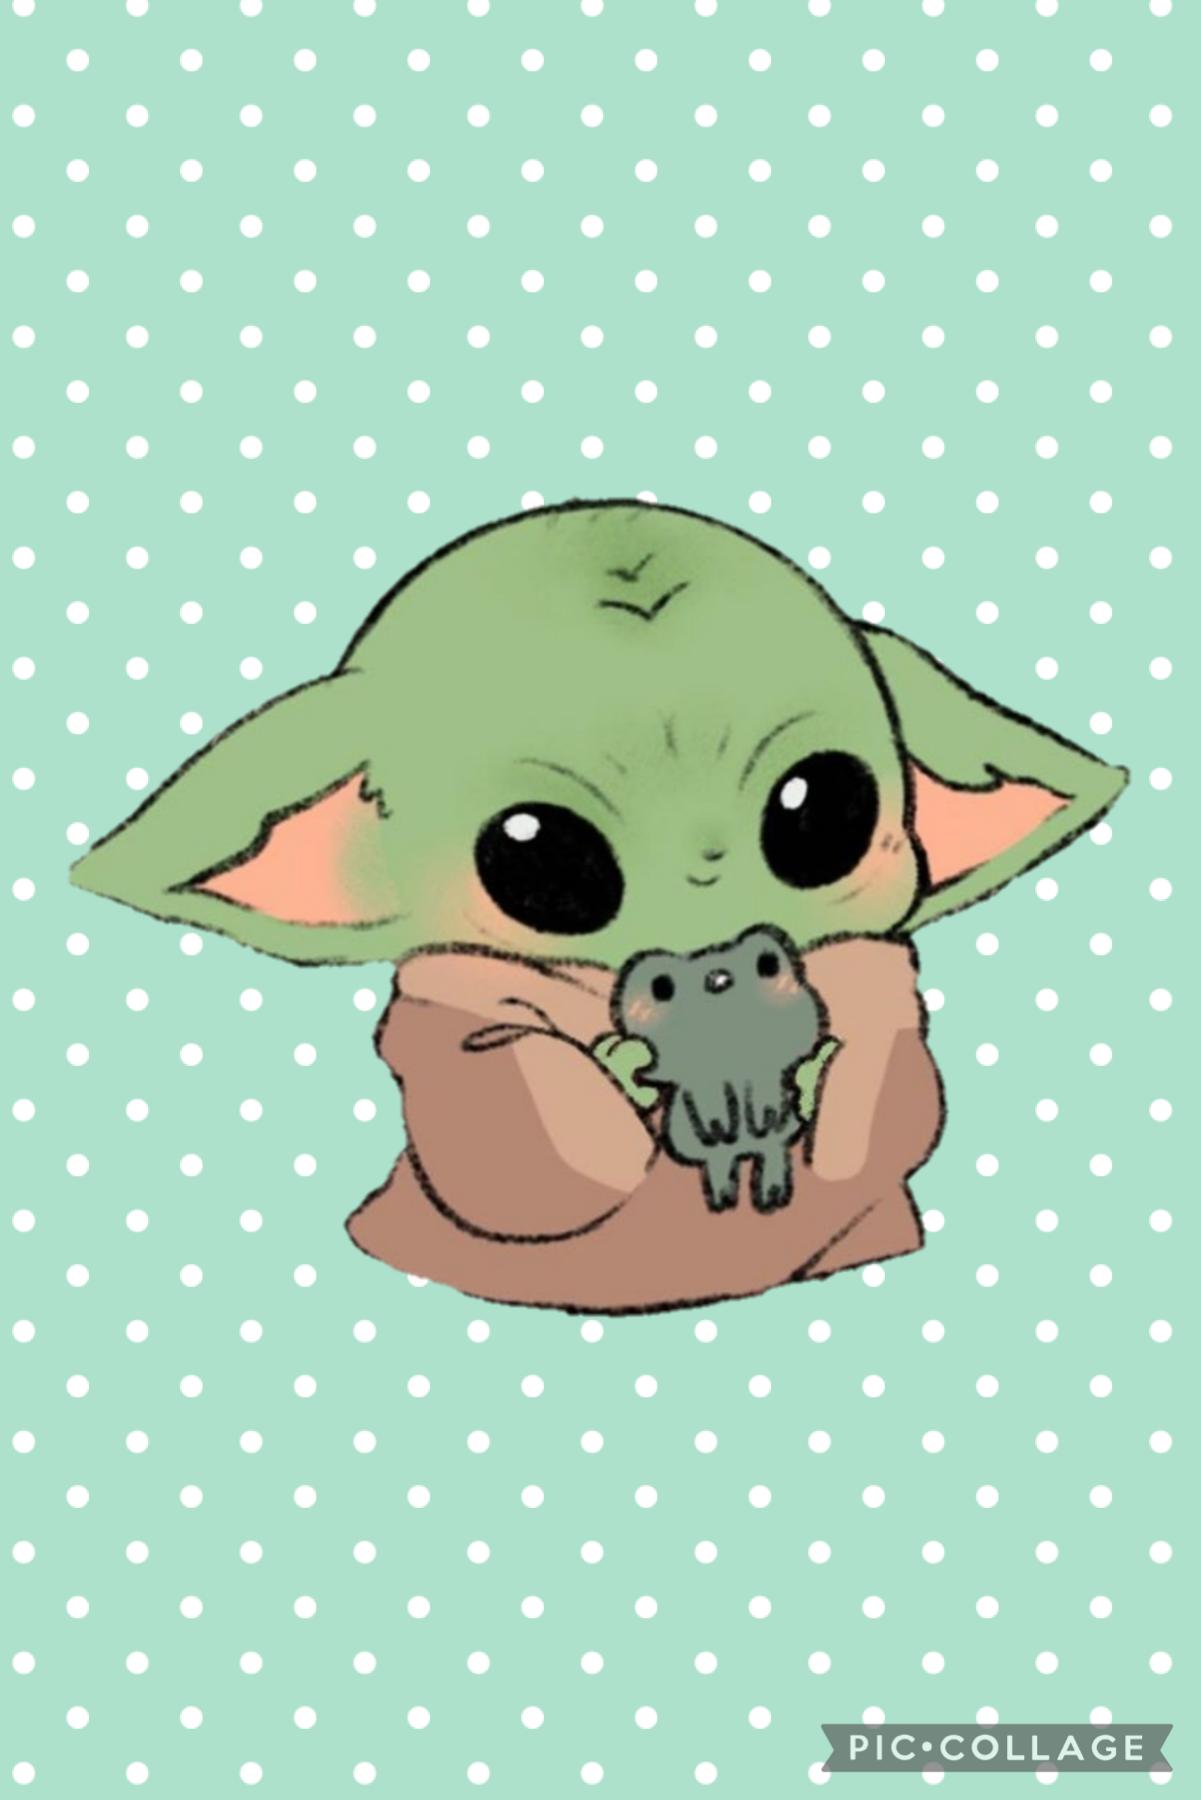 Who else loves Baby Yoda because I do